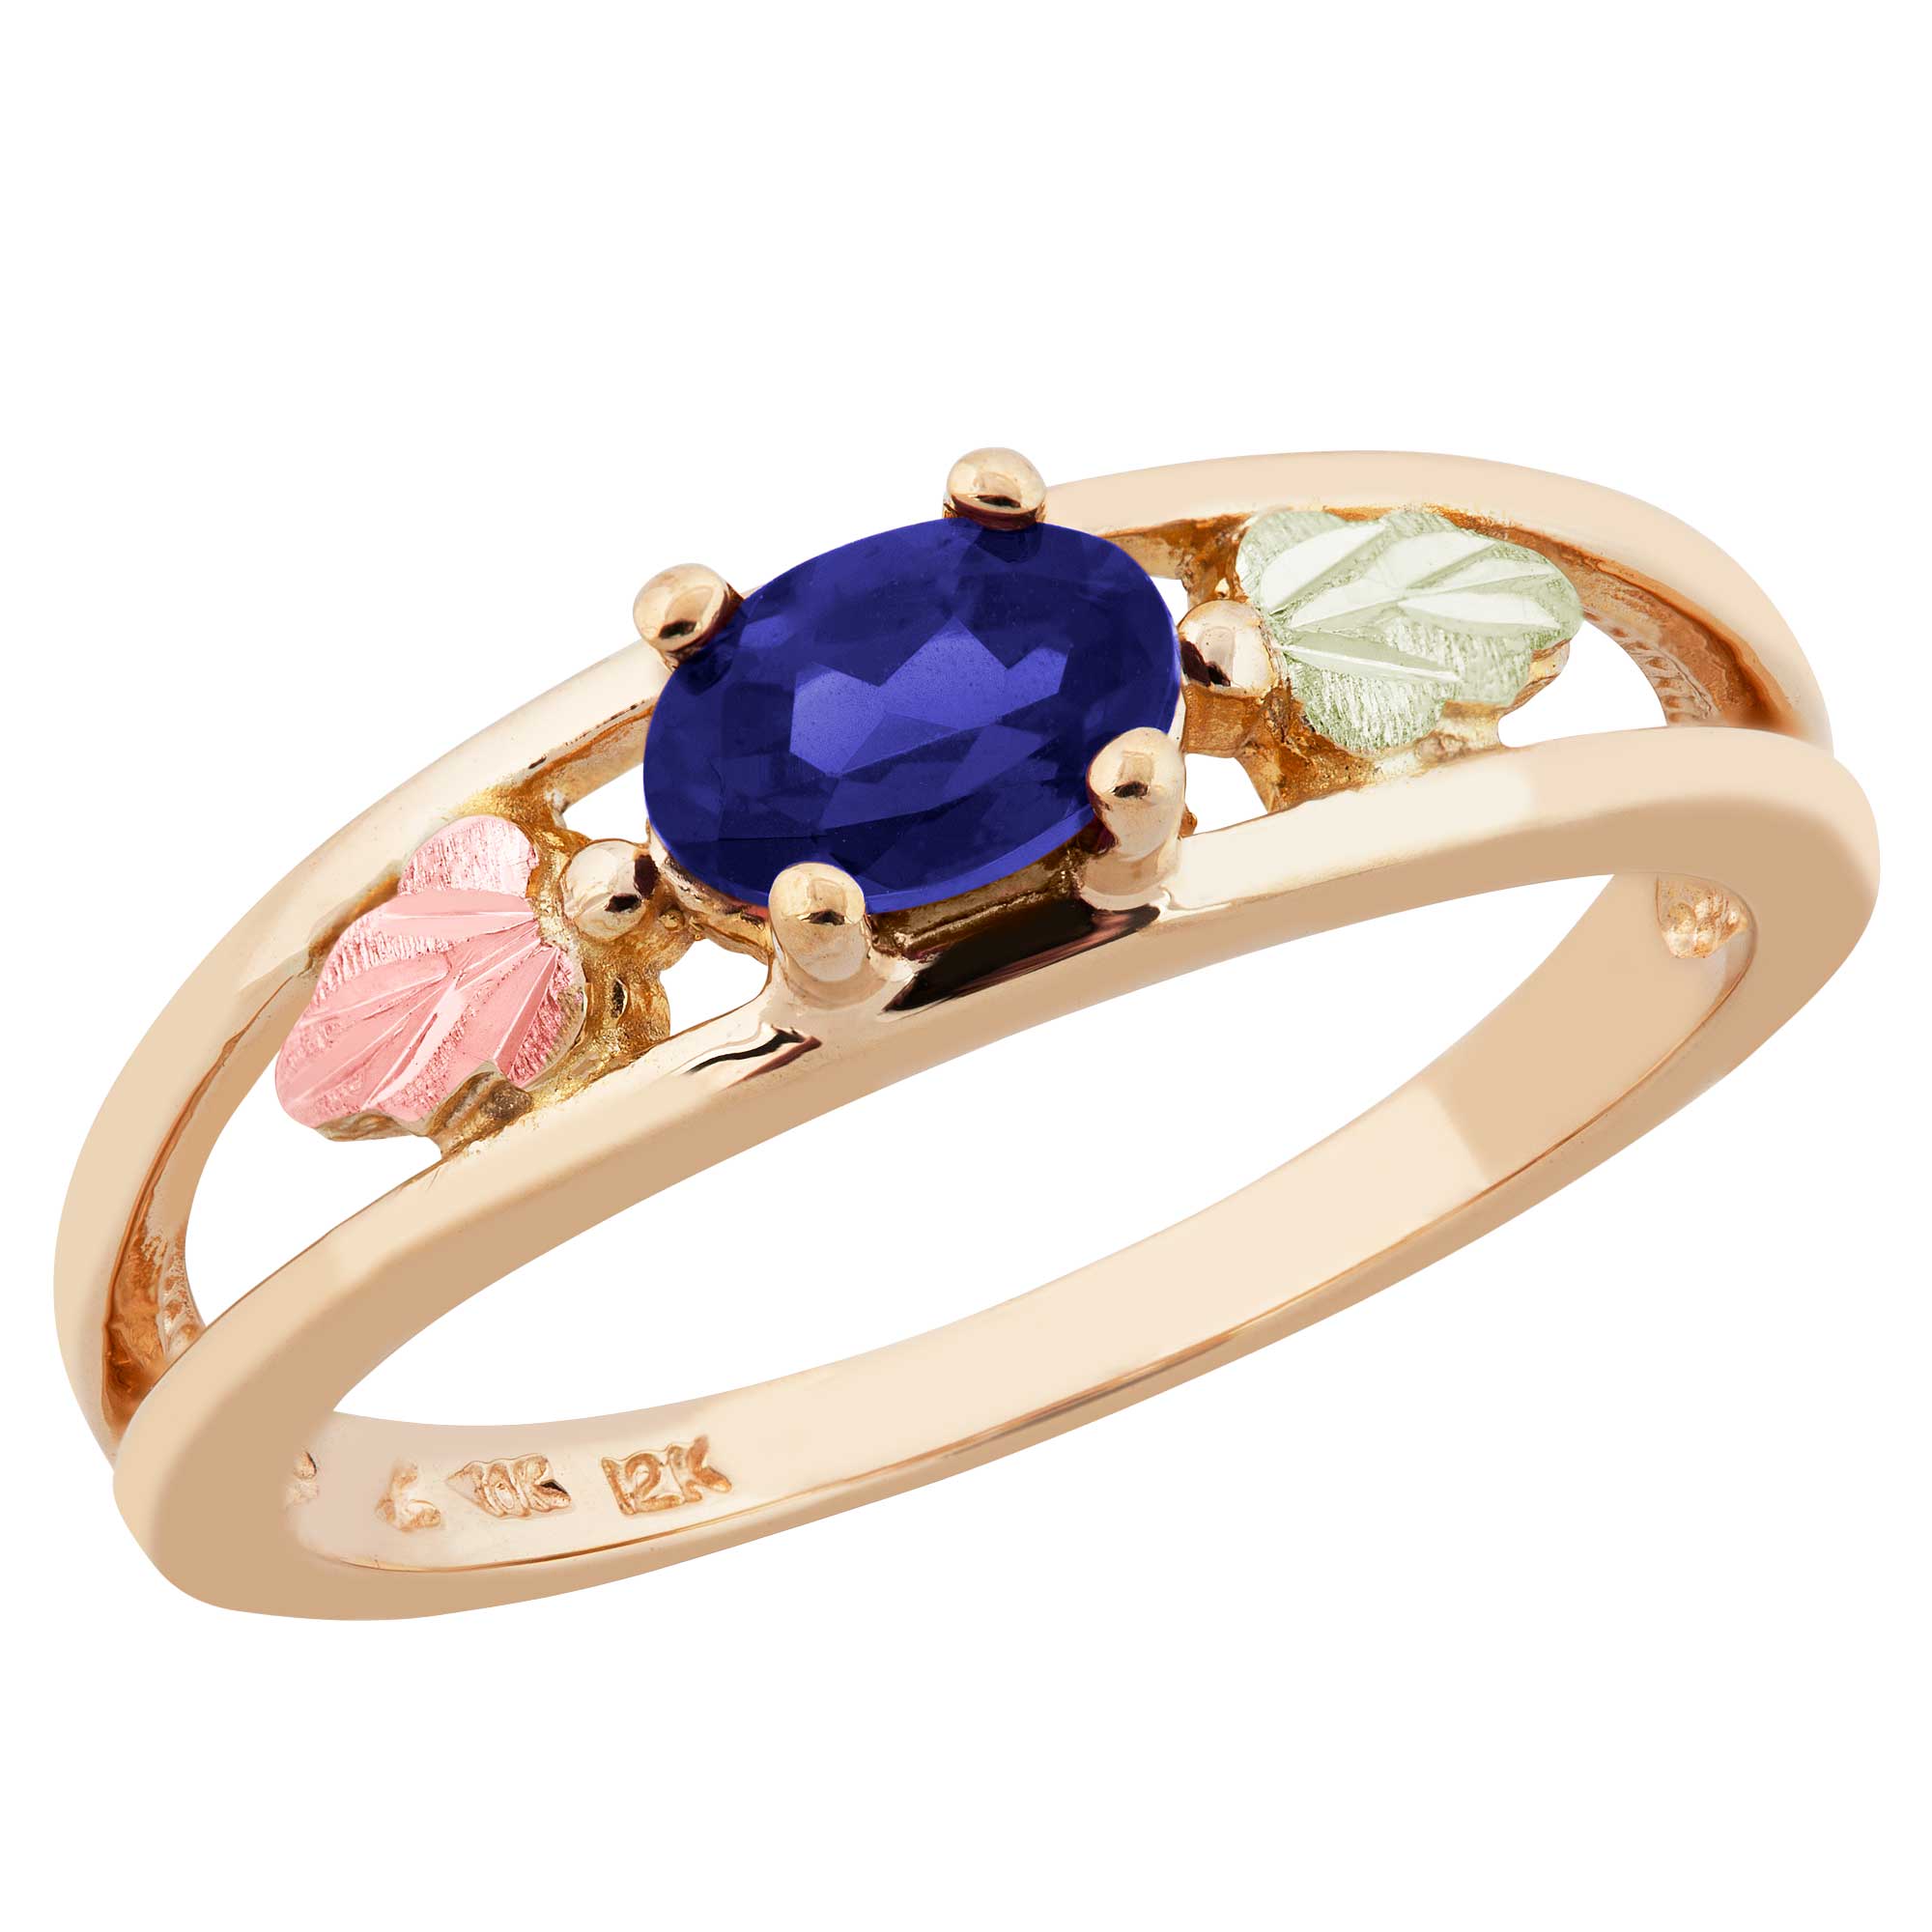 Blue Sapphire Gemstone Ring, 12k Green and Rose Gold Black Hills Gold Motif